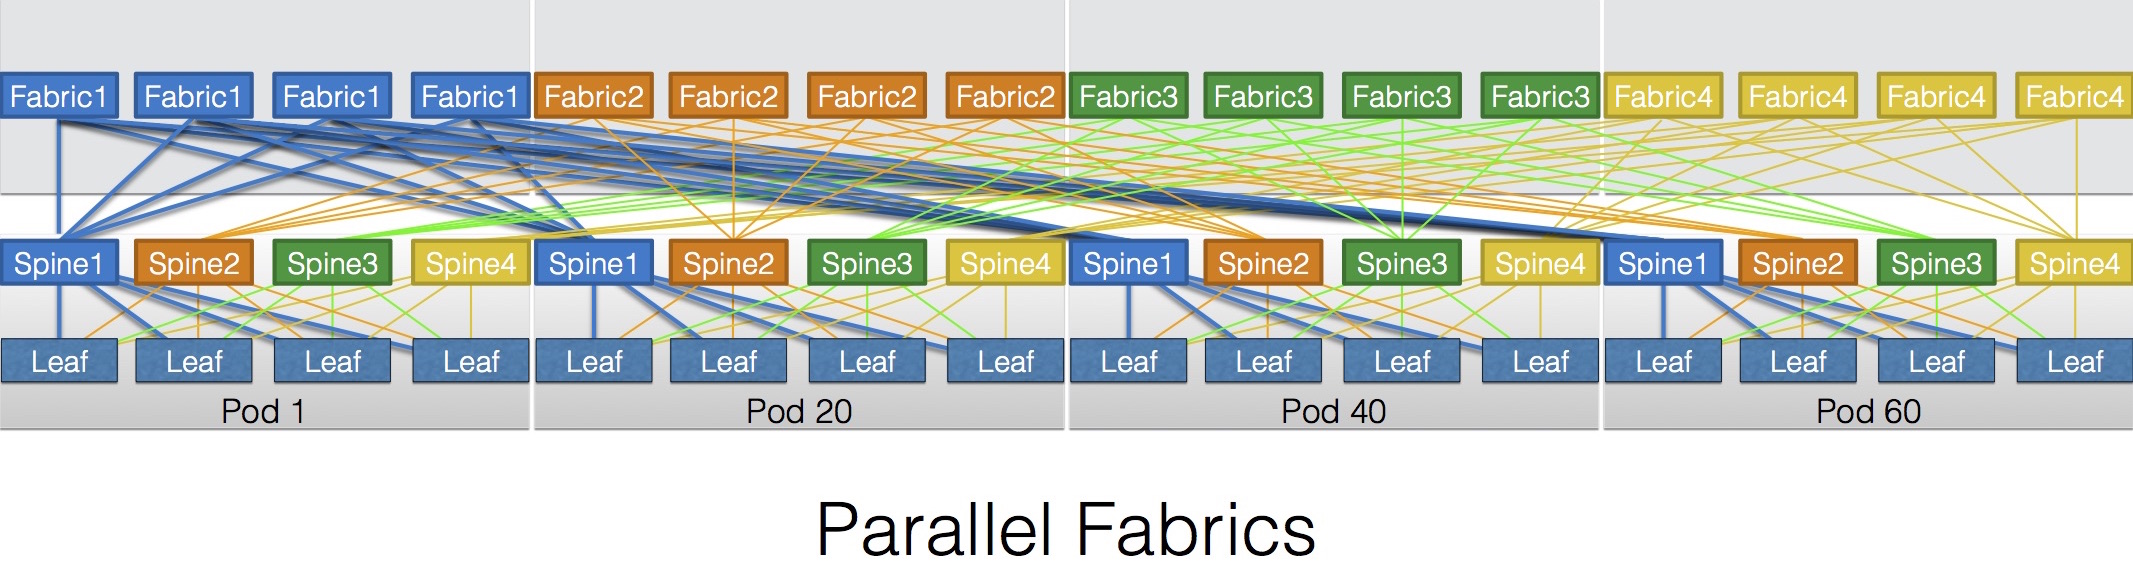 Parallel fabrics